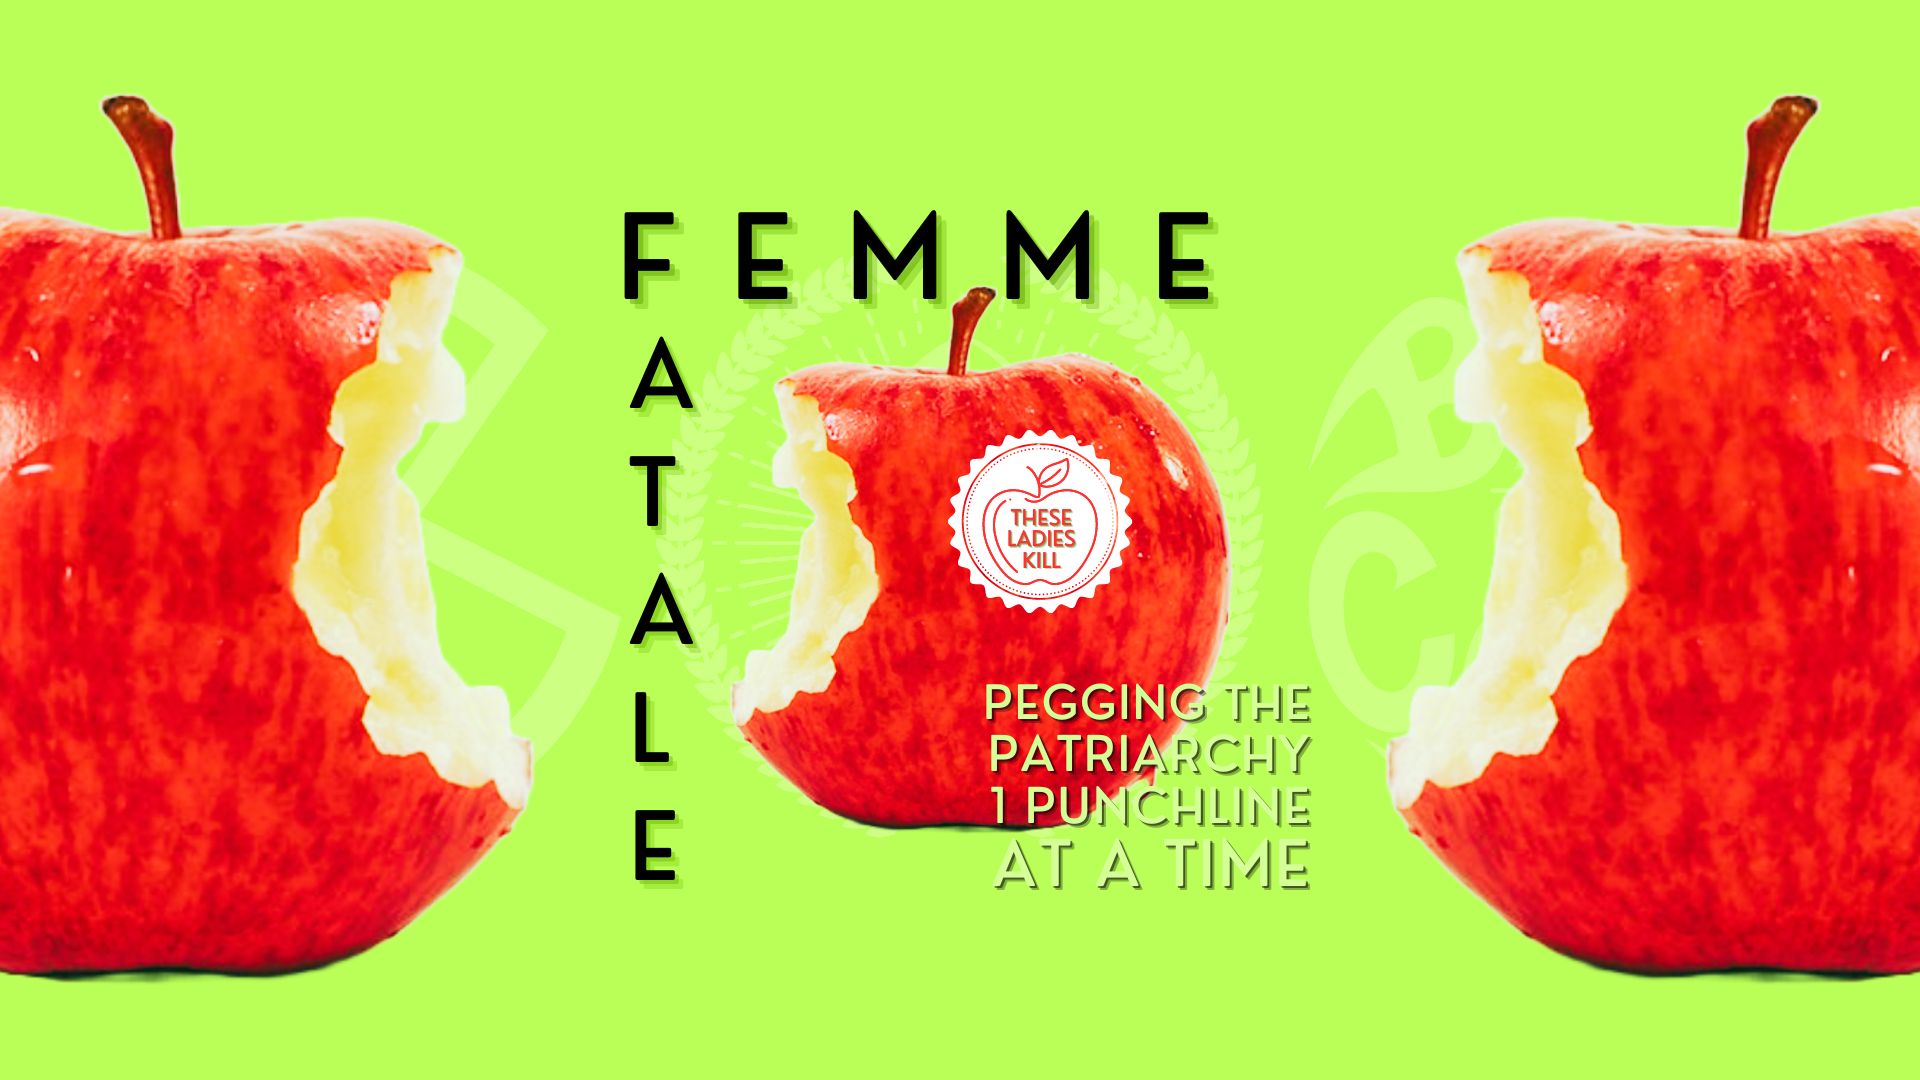 Femme Fatale Comedy Show, Boise, Idaho, United States